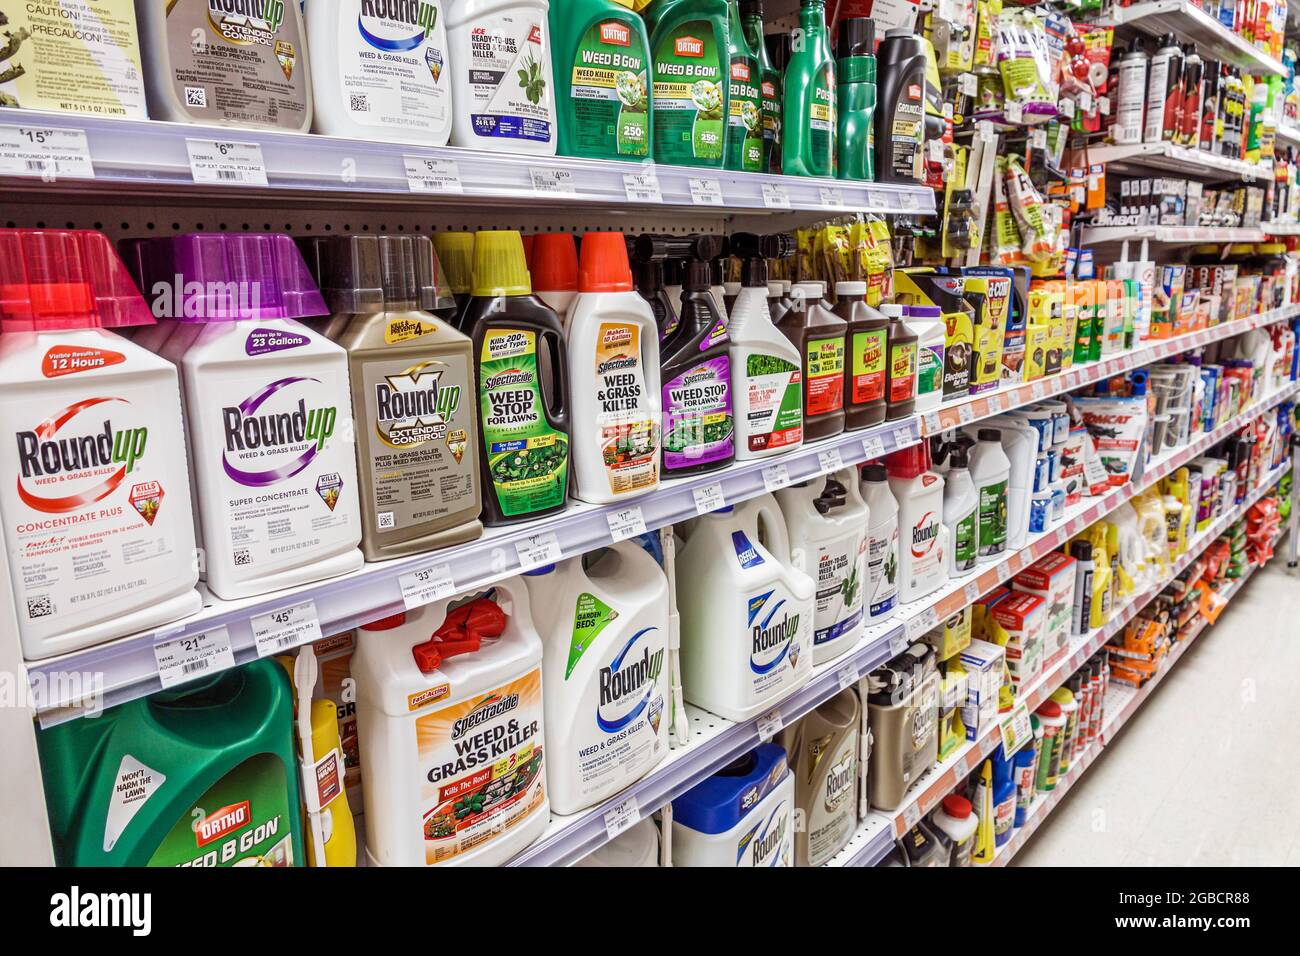 Orlando Florida, Ace Hardware Pestizide Insektizide Gifte, Insektenspray Unkrautvernichter Roundup Regale zeigen Verkauf innen, Stockfoto